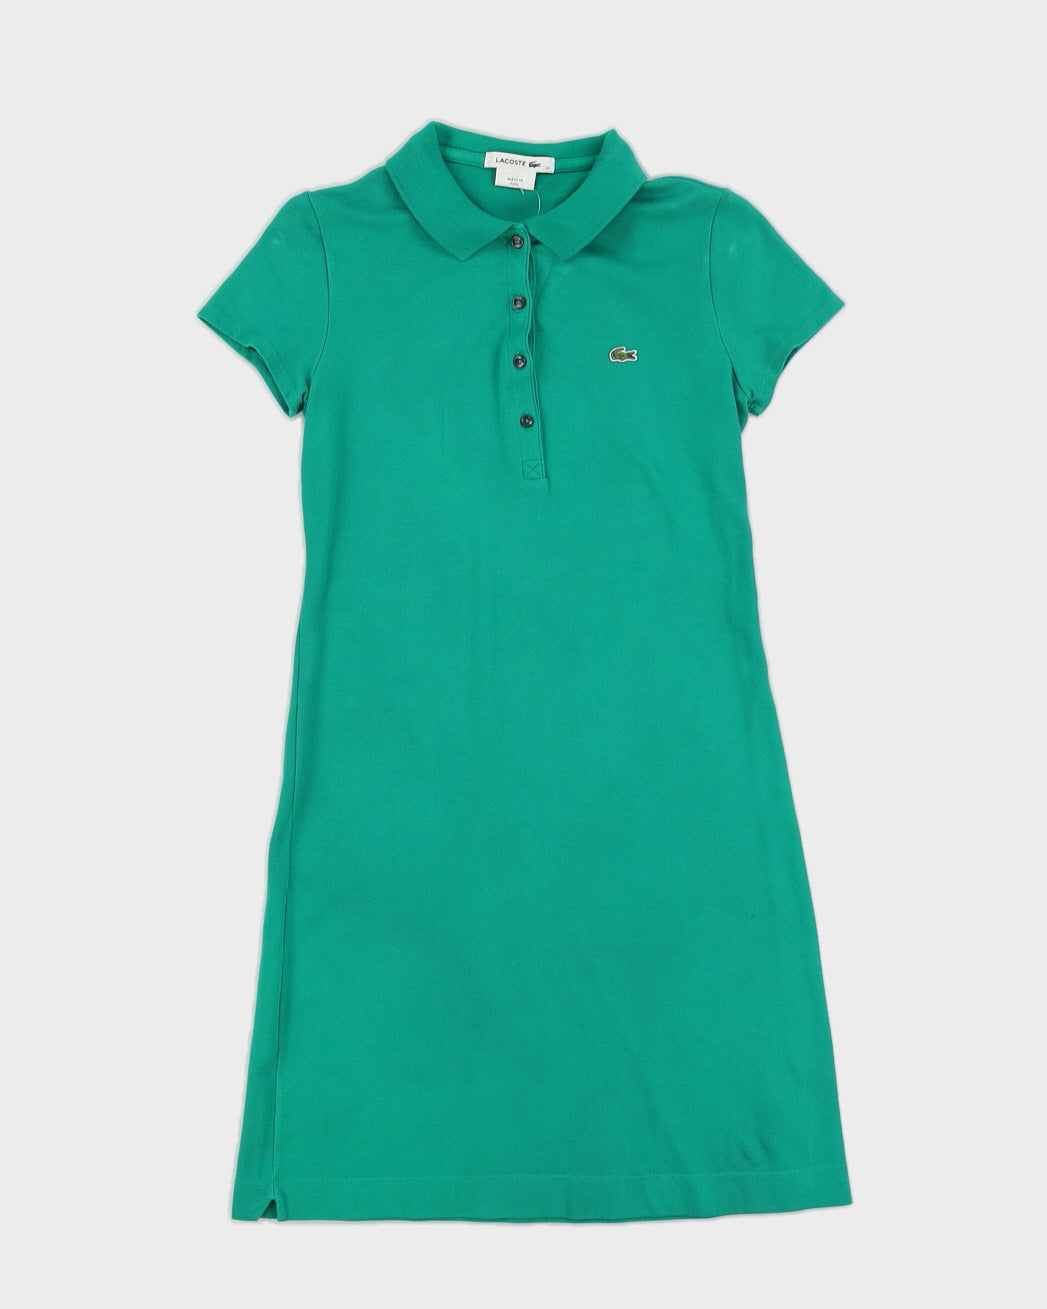 Lacoste Green Polo Dress - S